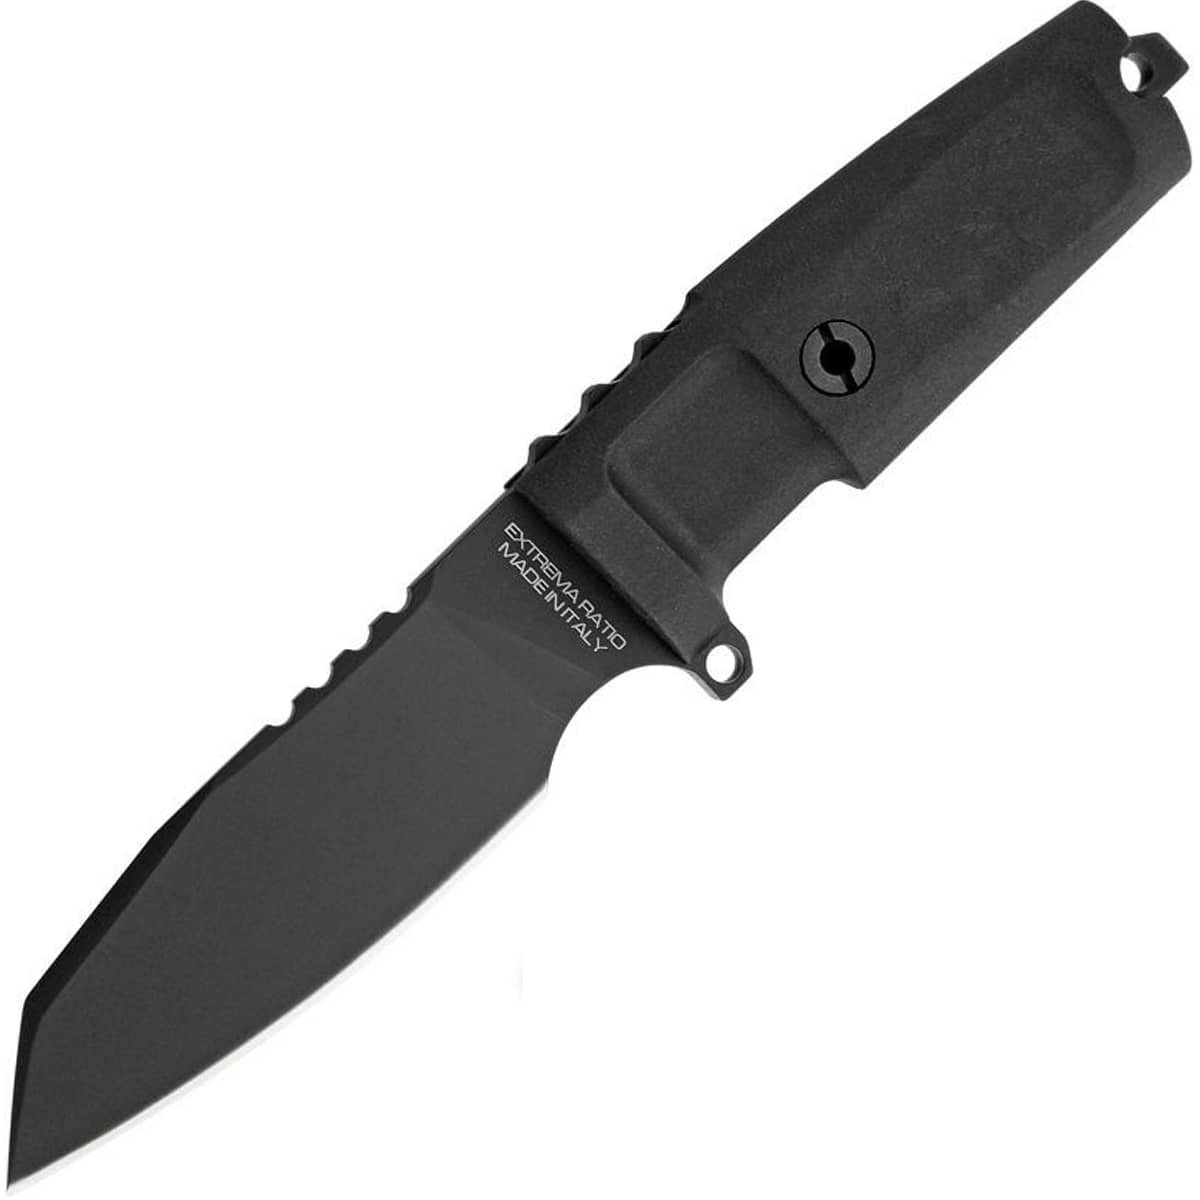 Extrema Ratio Task C Knife - Black